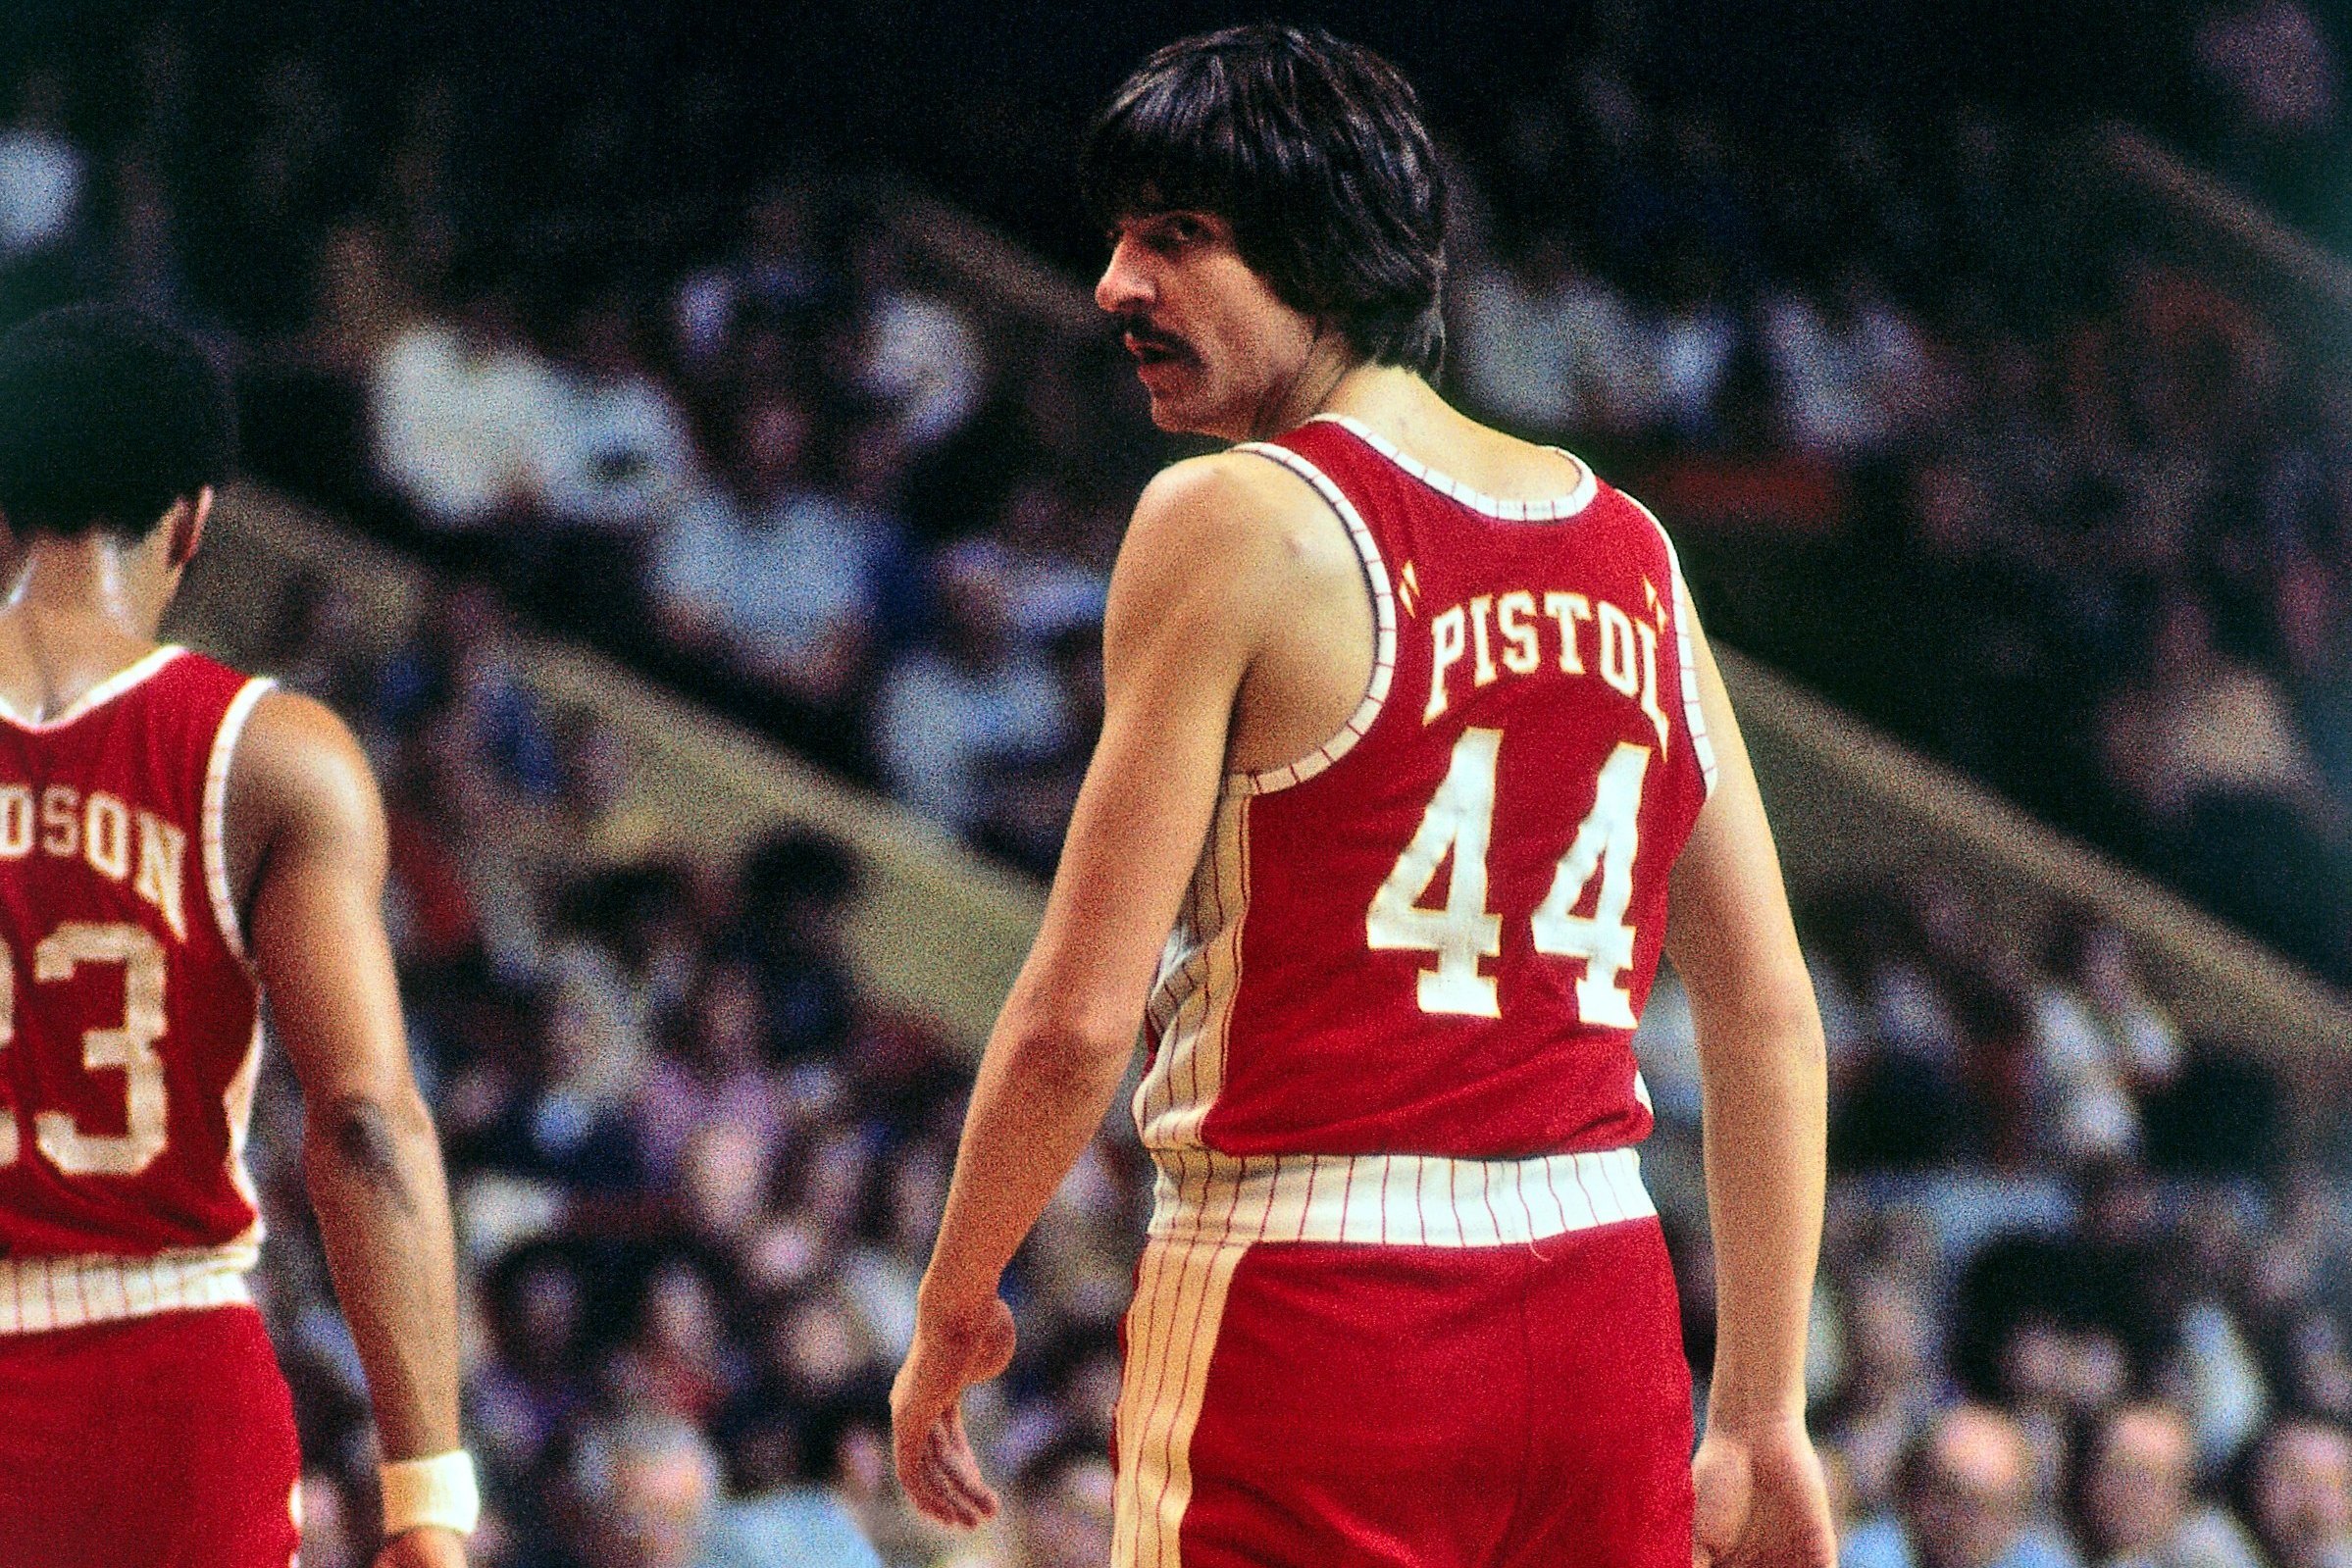 Should the NBA bring back the nickname jerseys? 👀 #shorts 